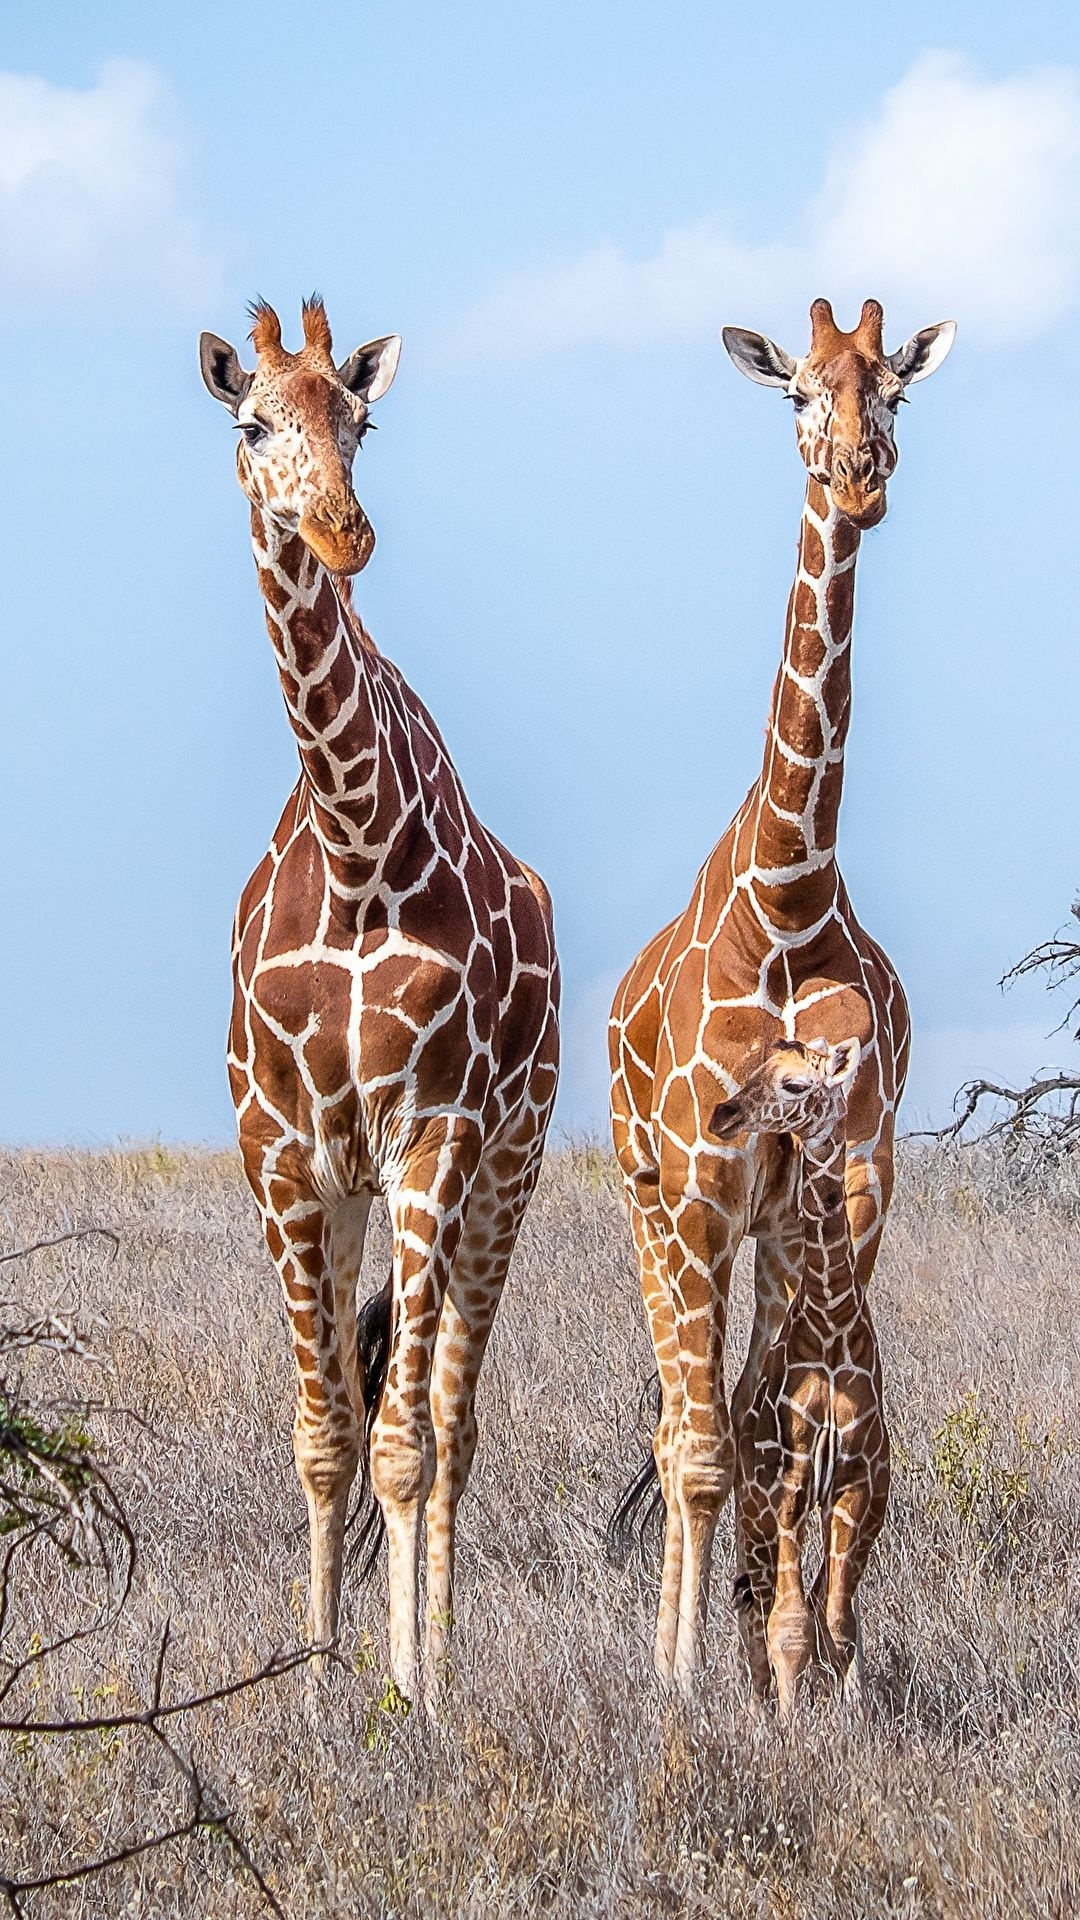 Giraffe: Native to sub-Saharan Africa, Spotted fur. 1080x1920 Full HD Wallpaper.